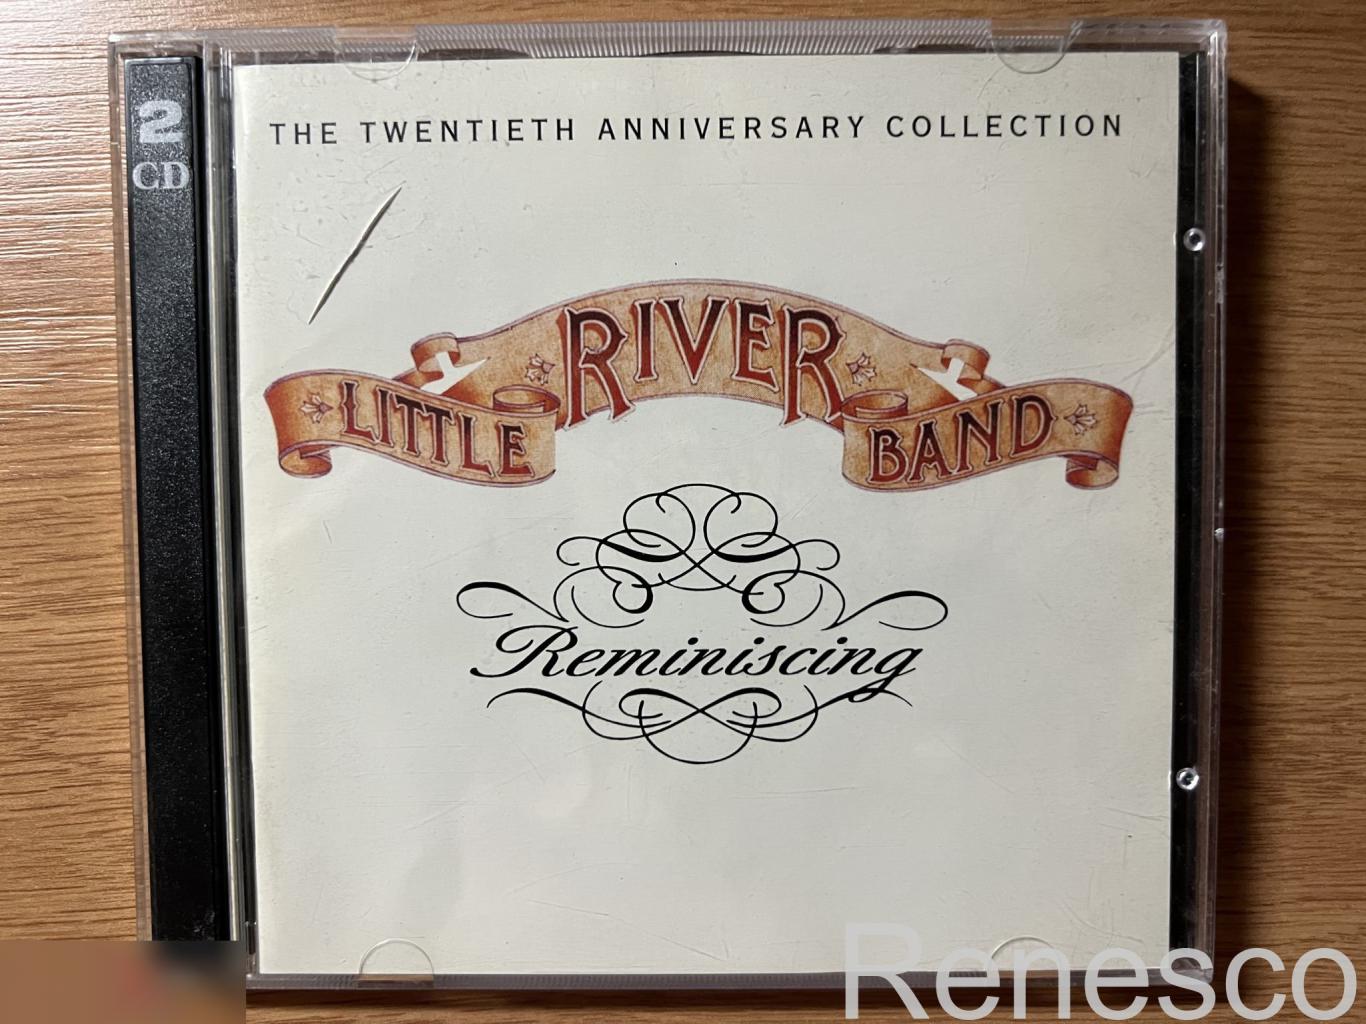 Little River Band – Reminiscing: The Twentieth Anniversary Collection (Australia